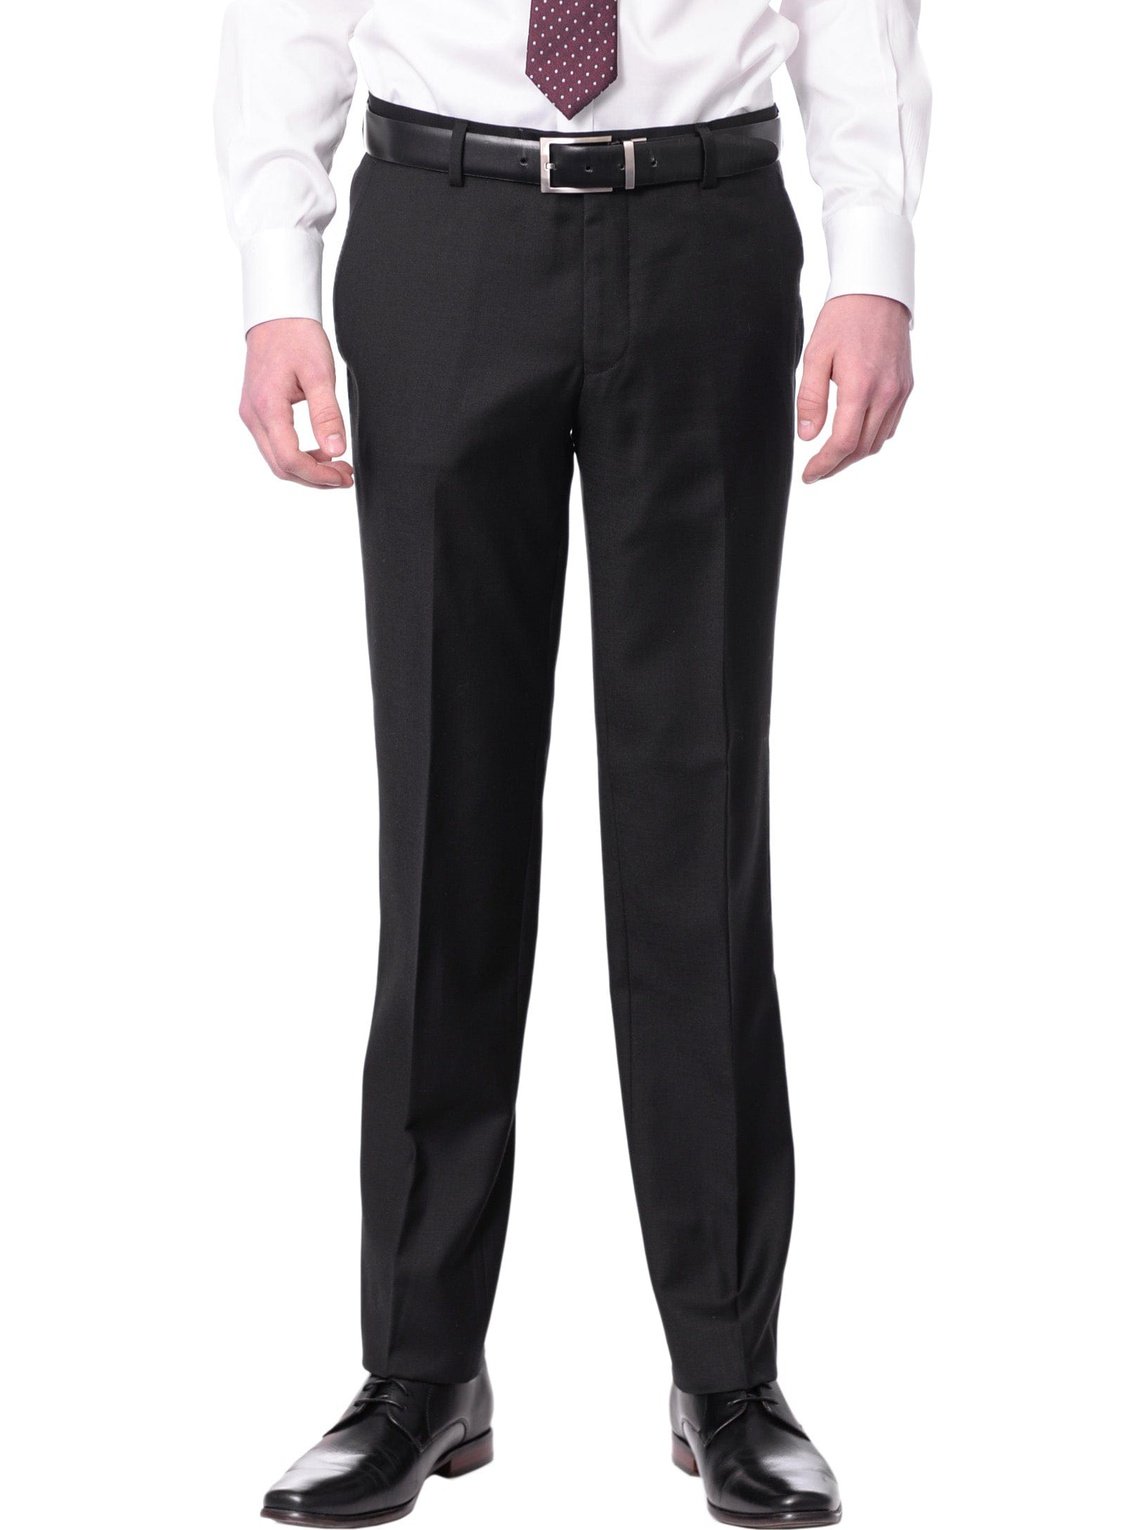 Label M PANTS Mens Extra Slim Fit Solid Black Flat Front Wool Dress Pants